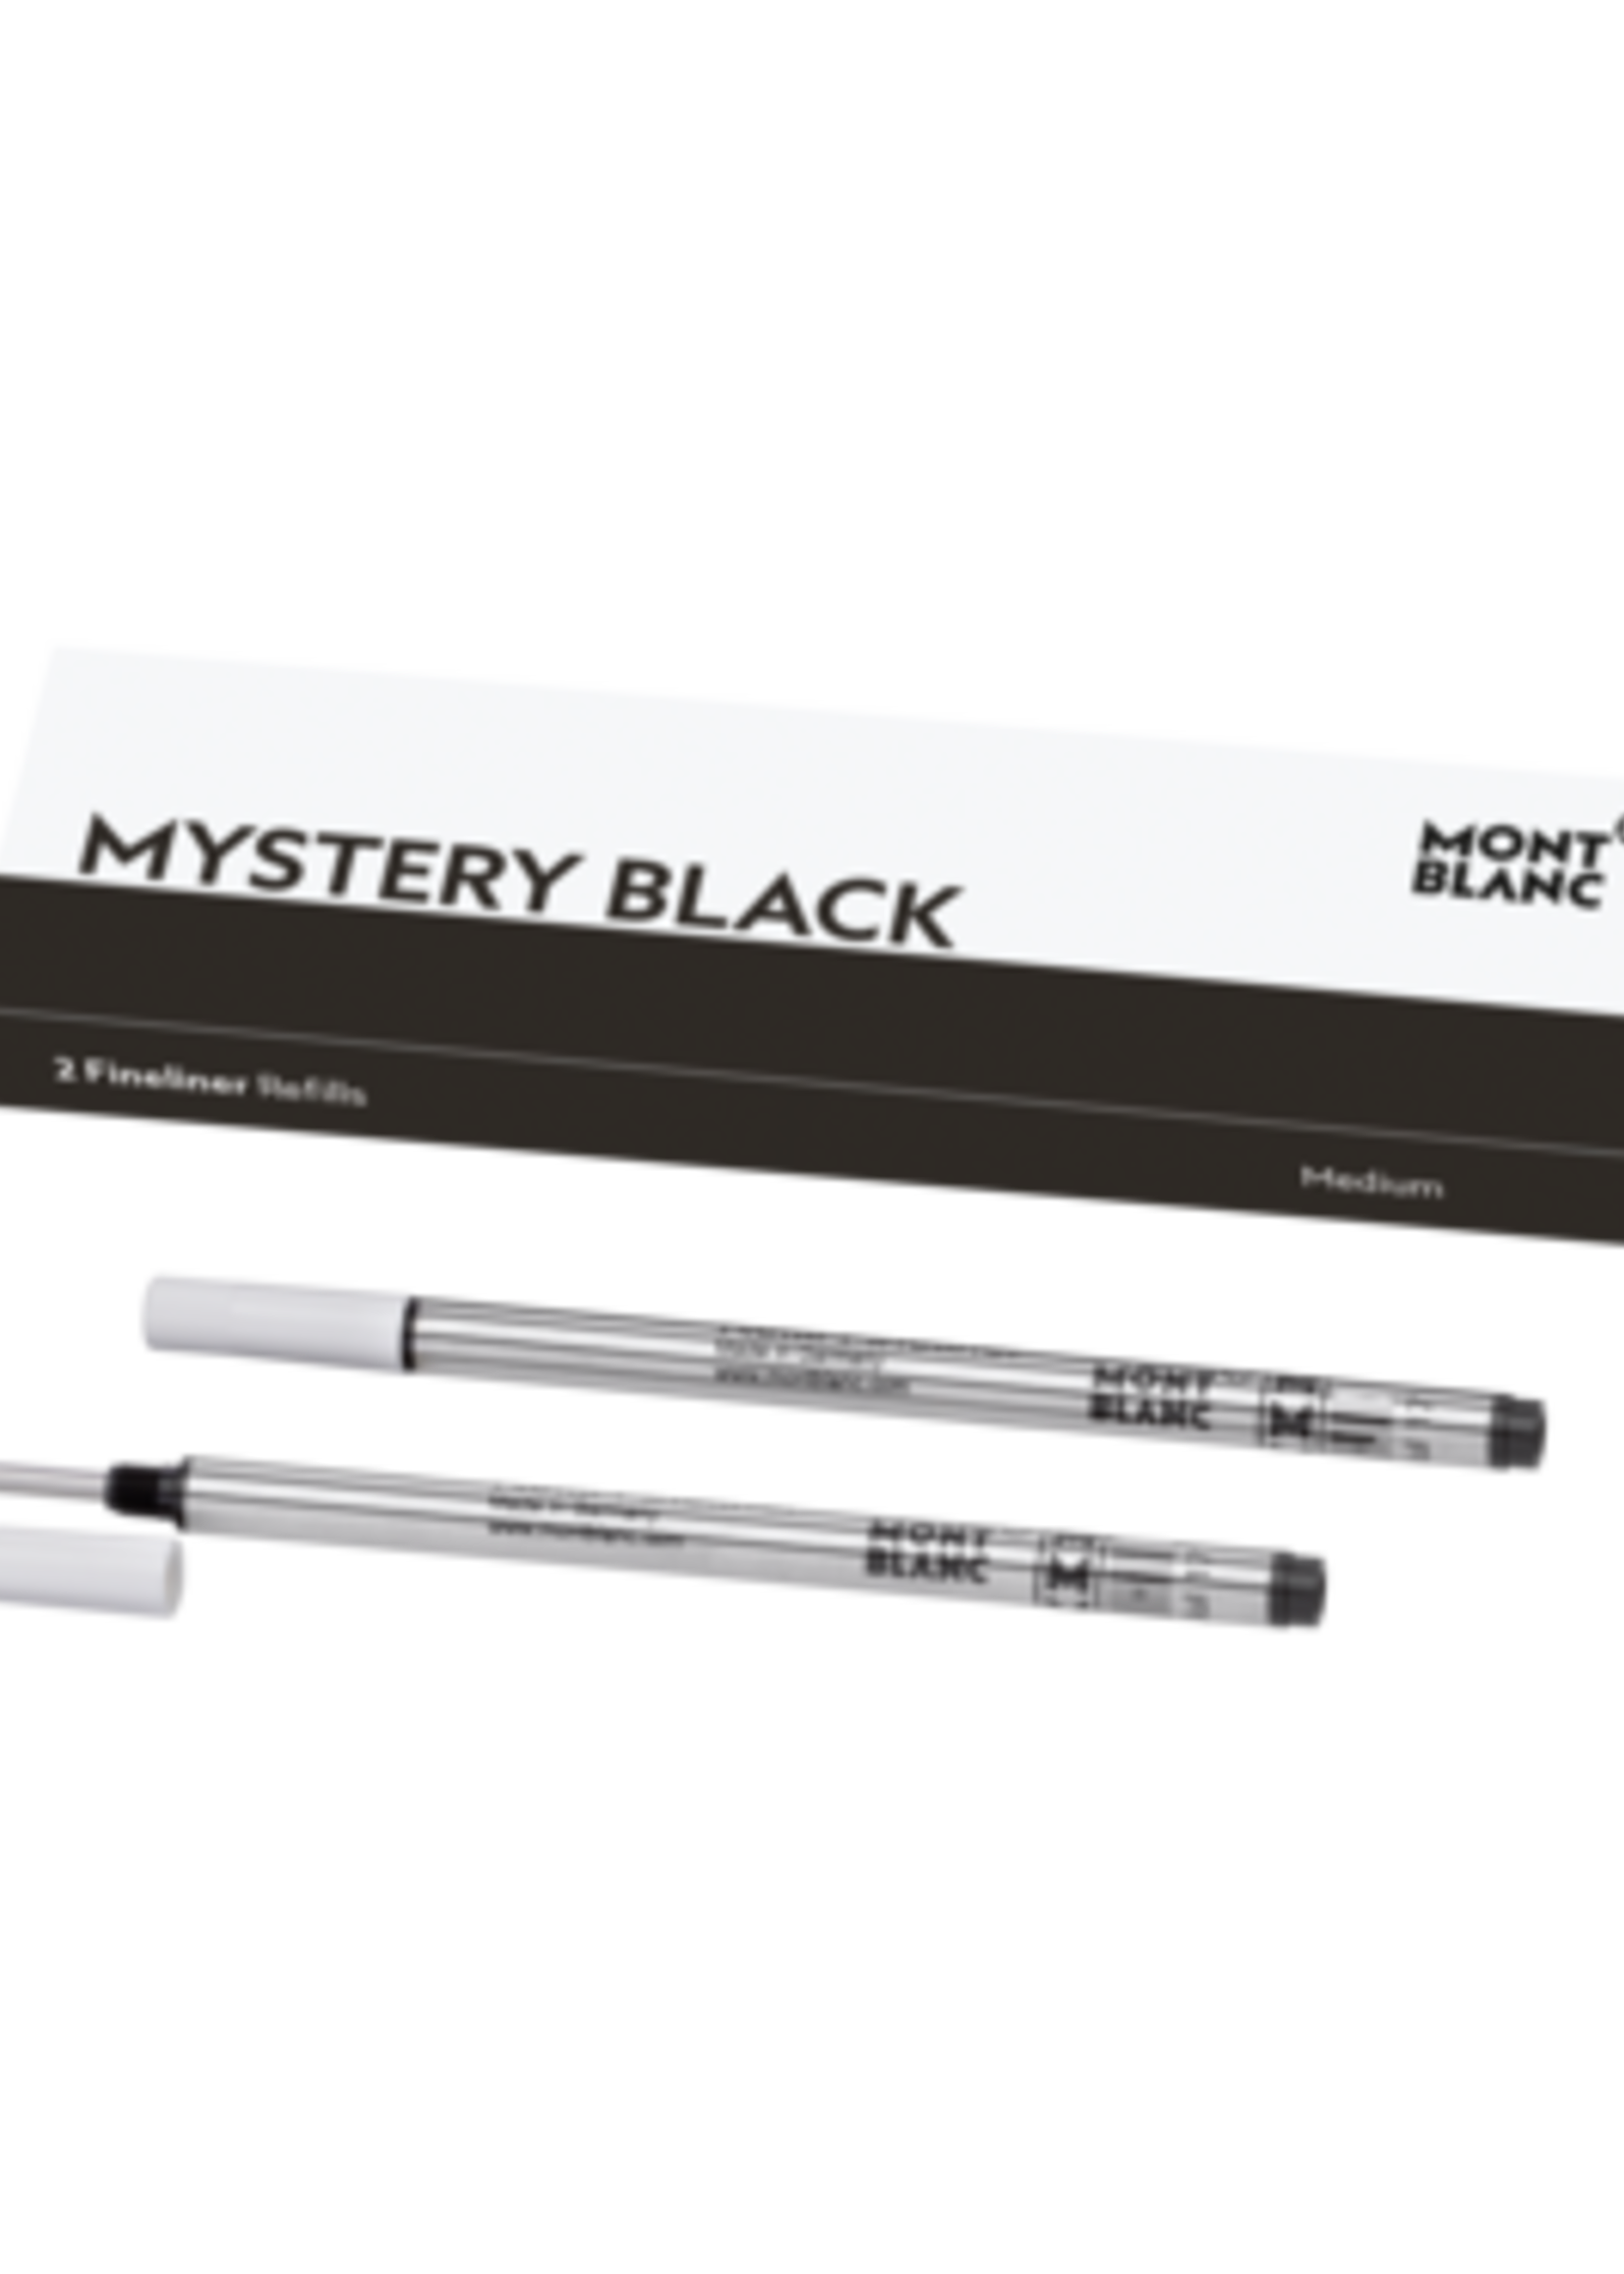 Montblanc REFILL FL M 2x1 MYSTERY BLACK